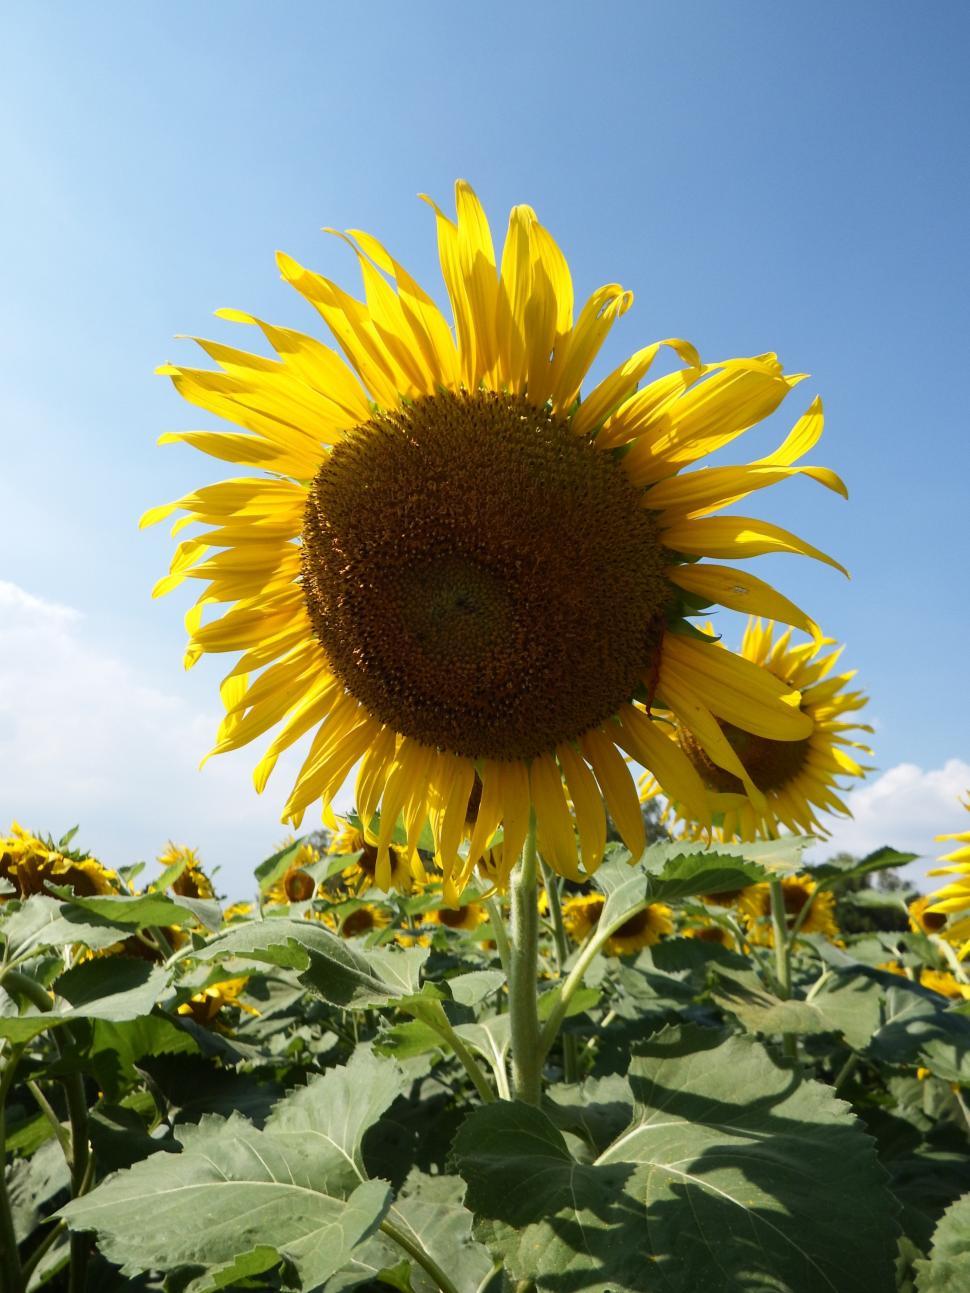 Free Image of Single Sunflower on Blue Sky Background  